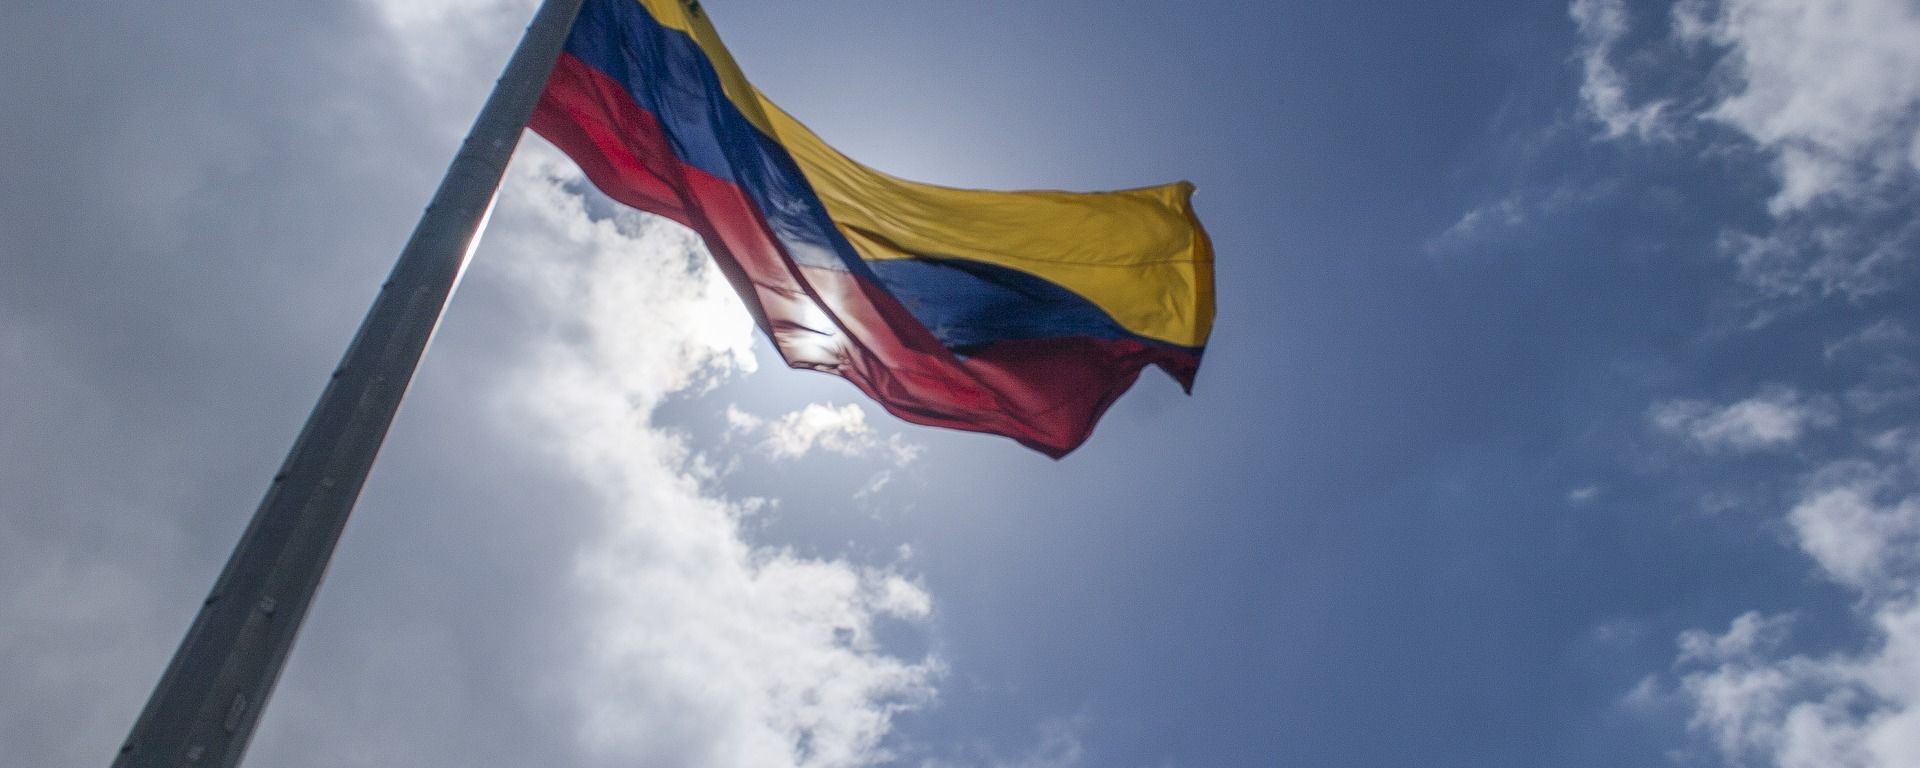 Bandera de Venezuela - Sputnik Mundo, 1920, 23.06.2021